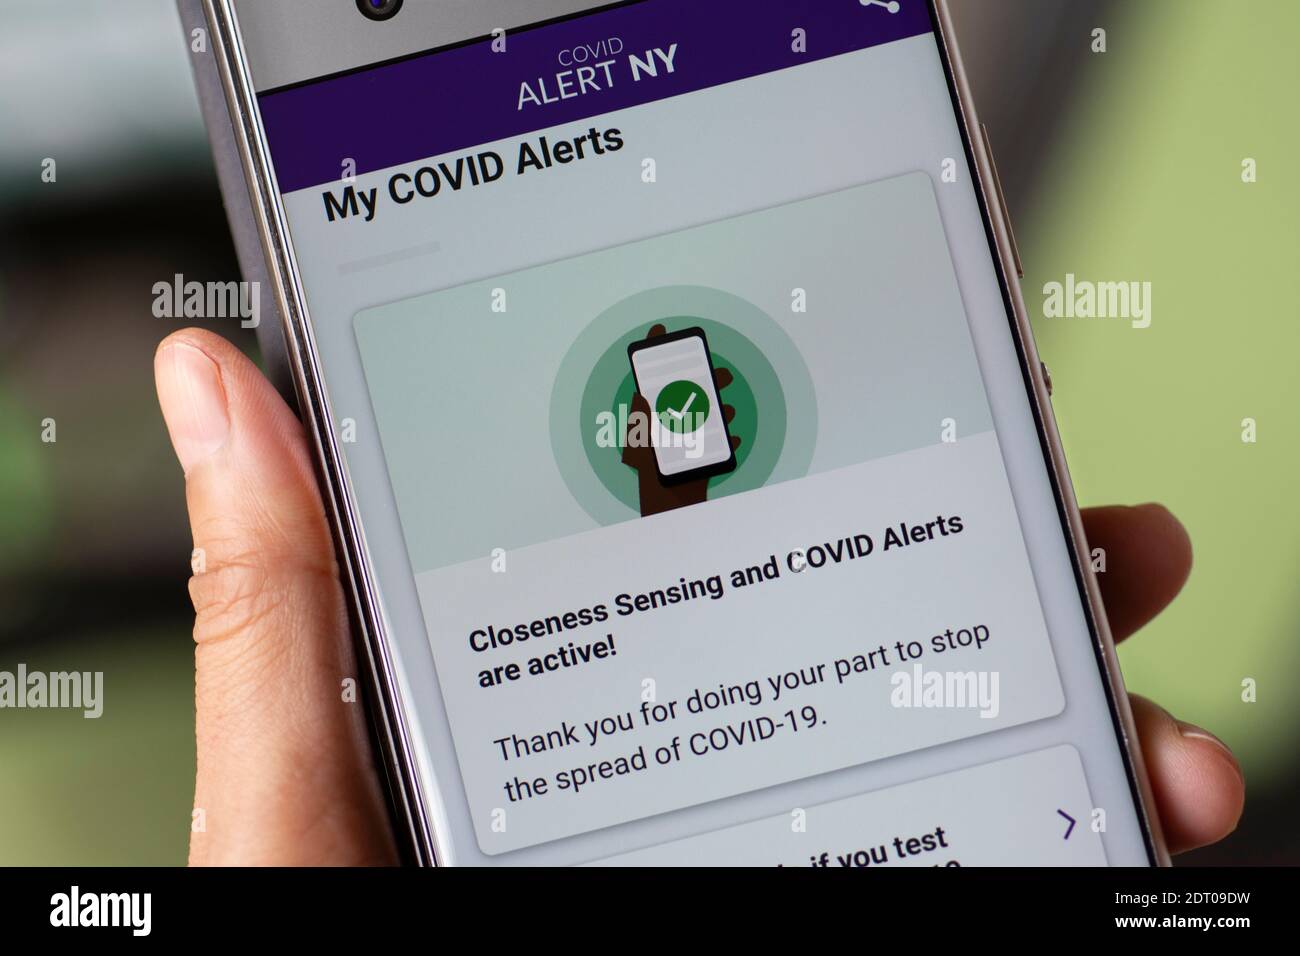 COVID Alert NY App en el teléfono móvil, pantalla del smartphone Foto de stock